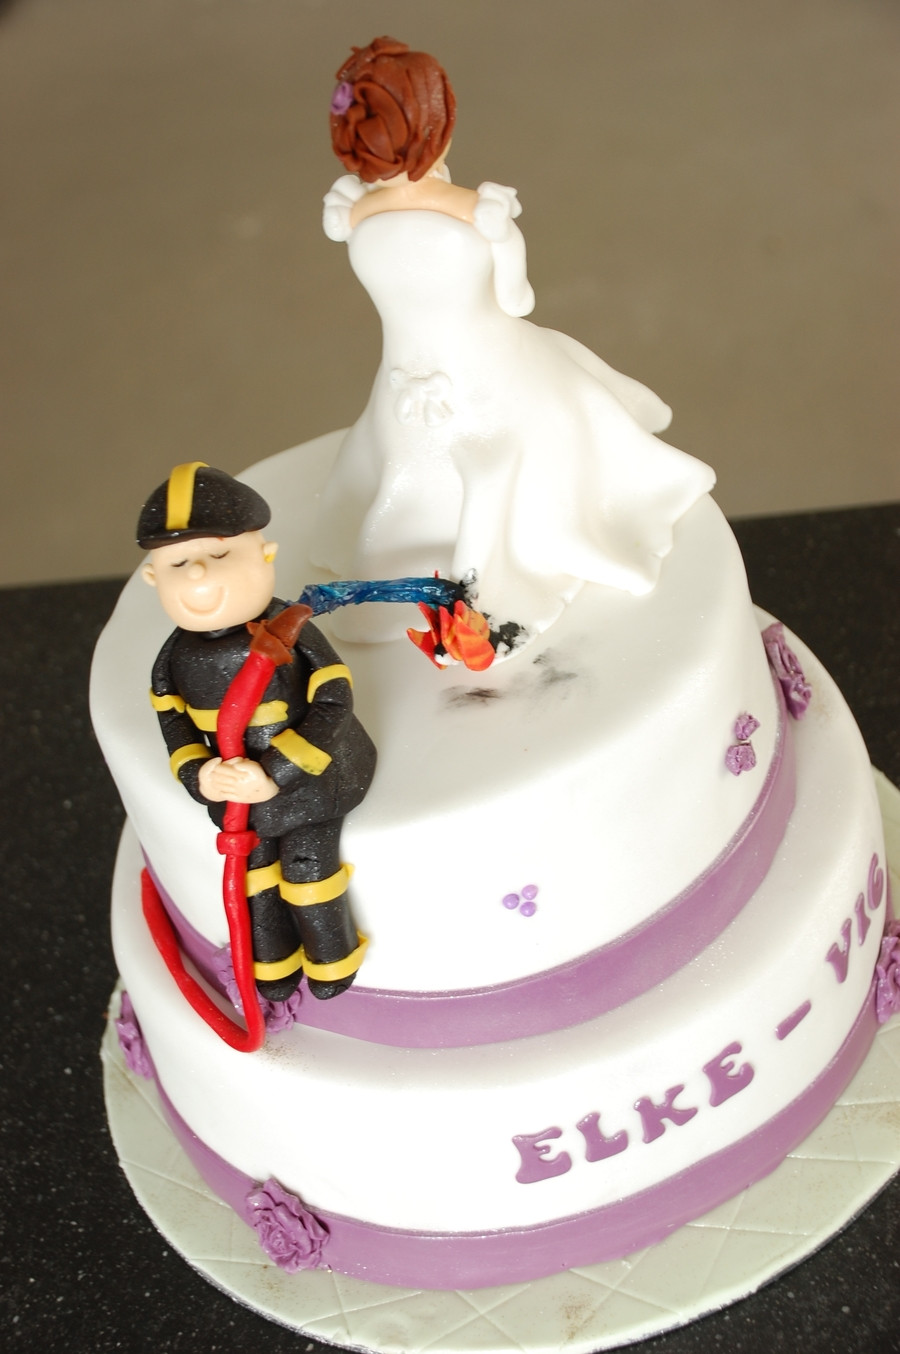 Firefighter Wedding Cakes 20 Ideas for Fireman Wedding Cake Cakecentral